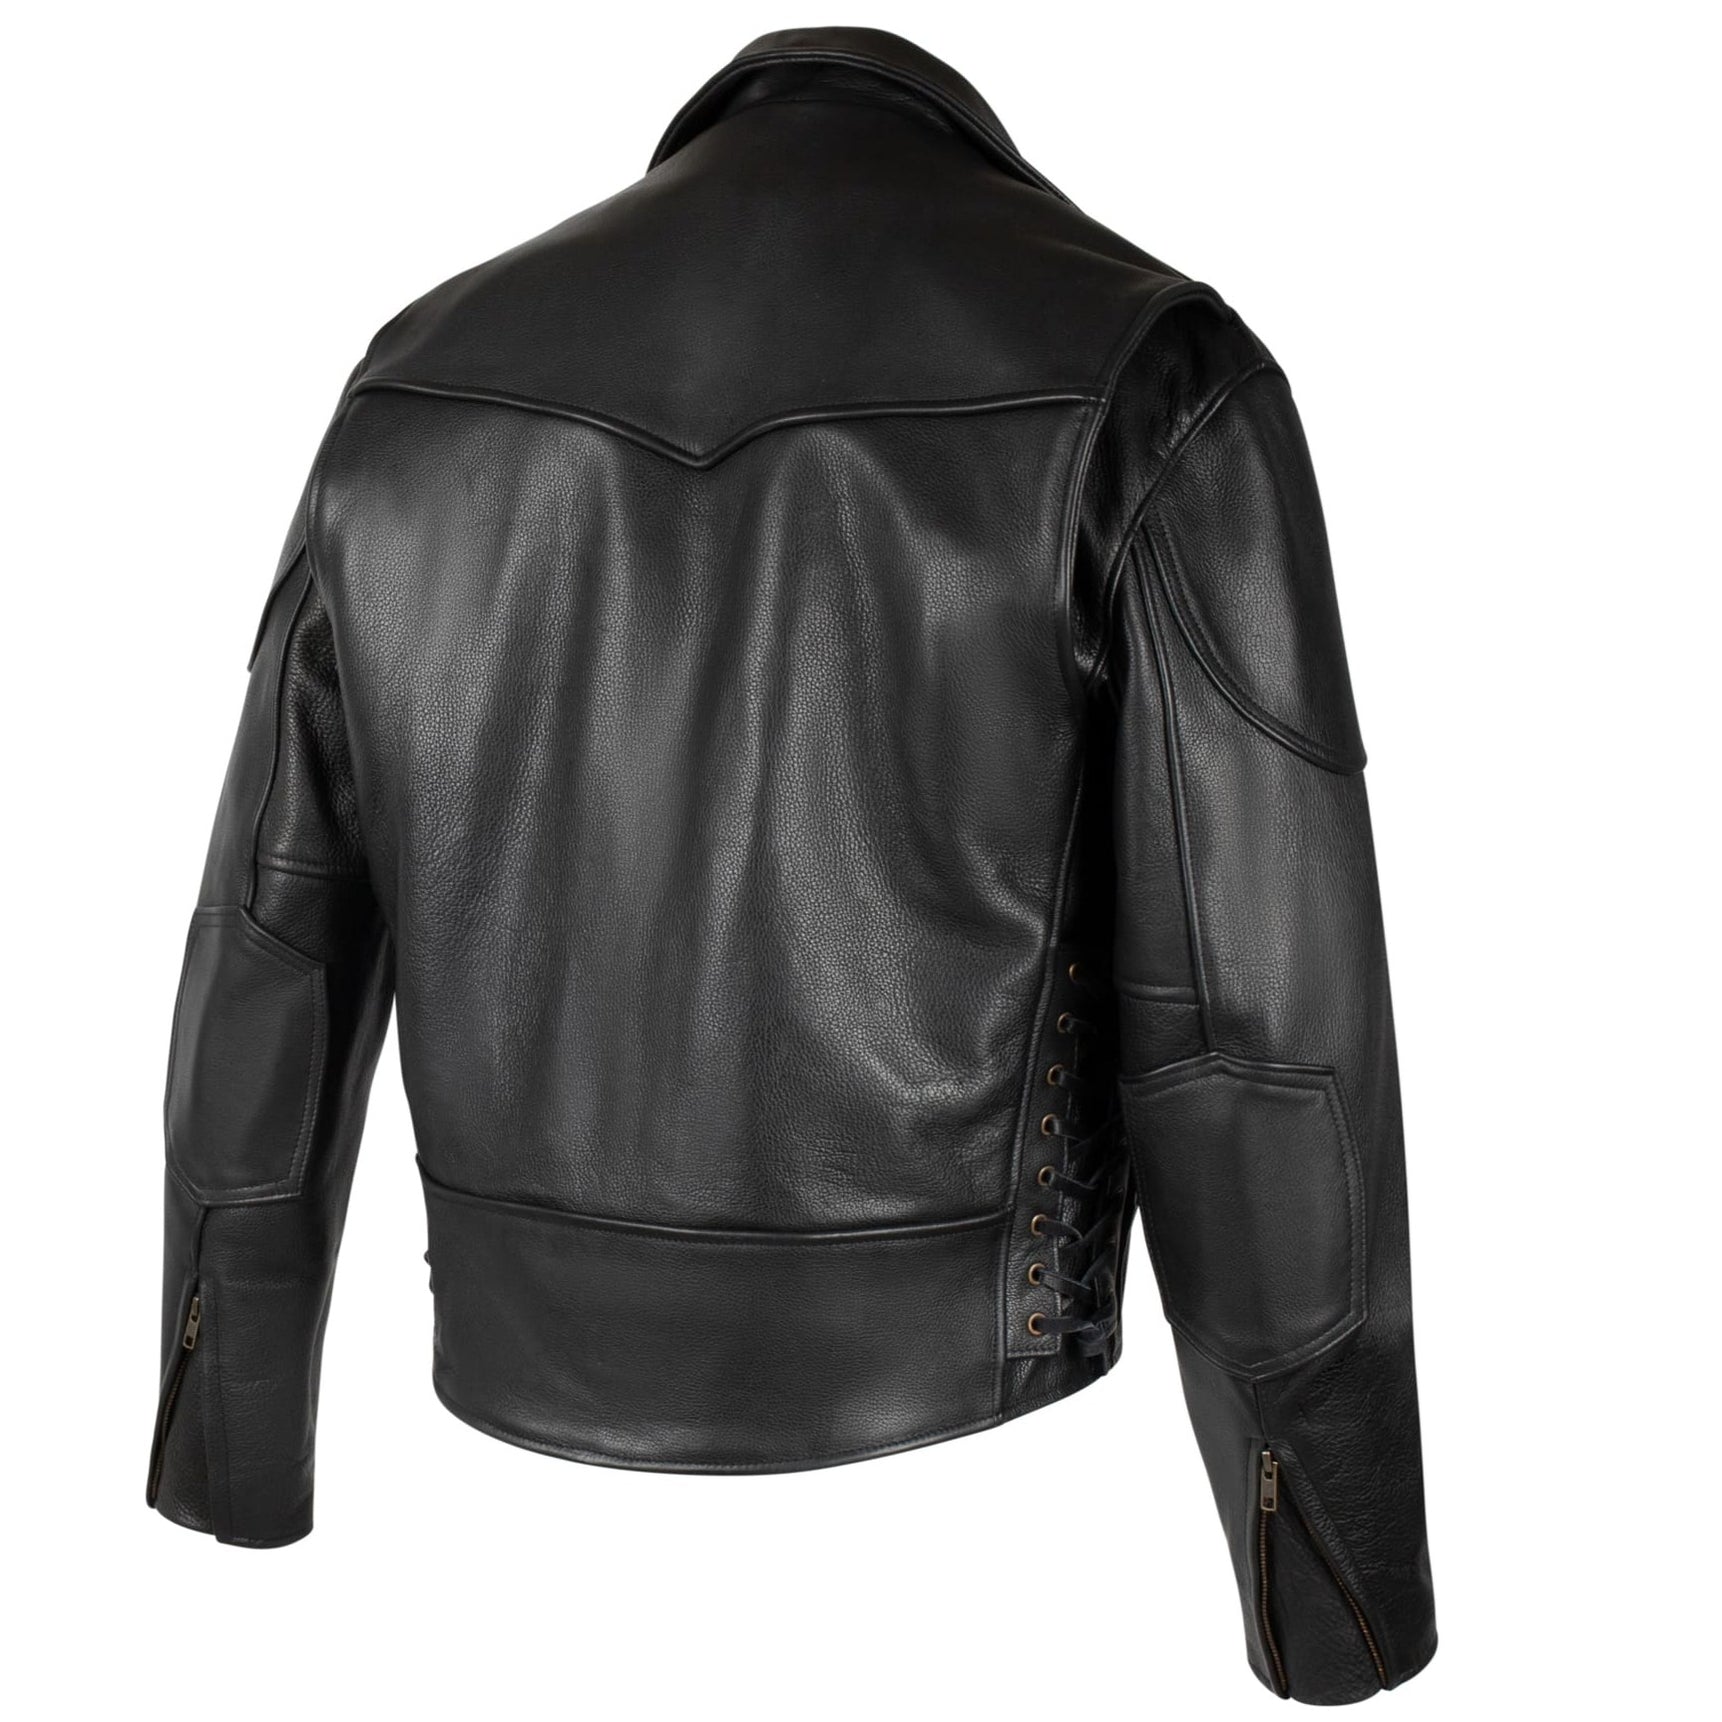 Mens Black Leather Motorcycle Jacket | Legendary USA